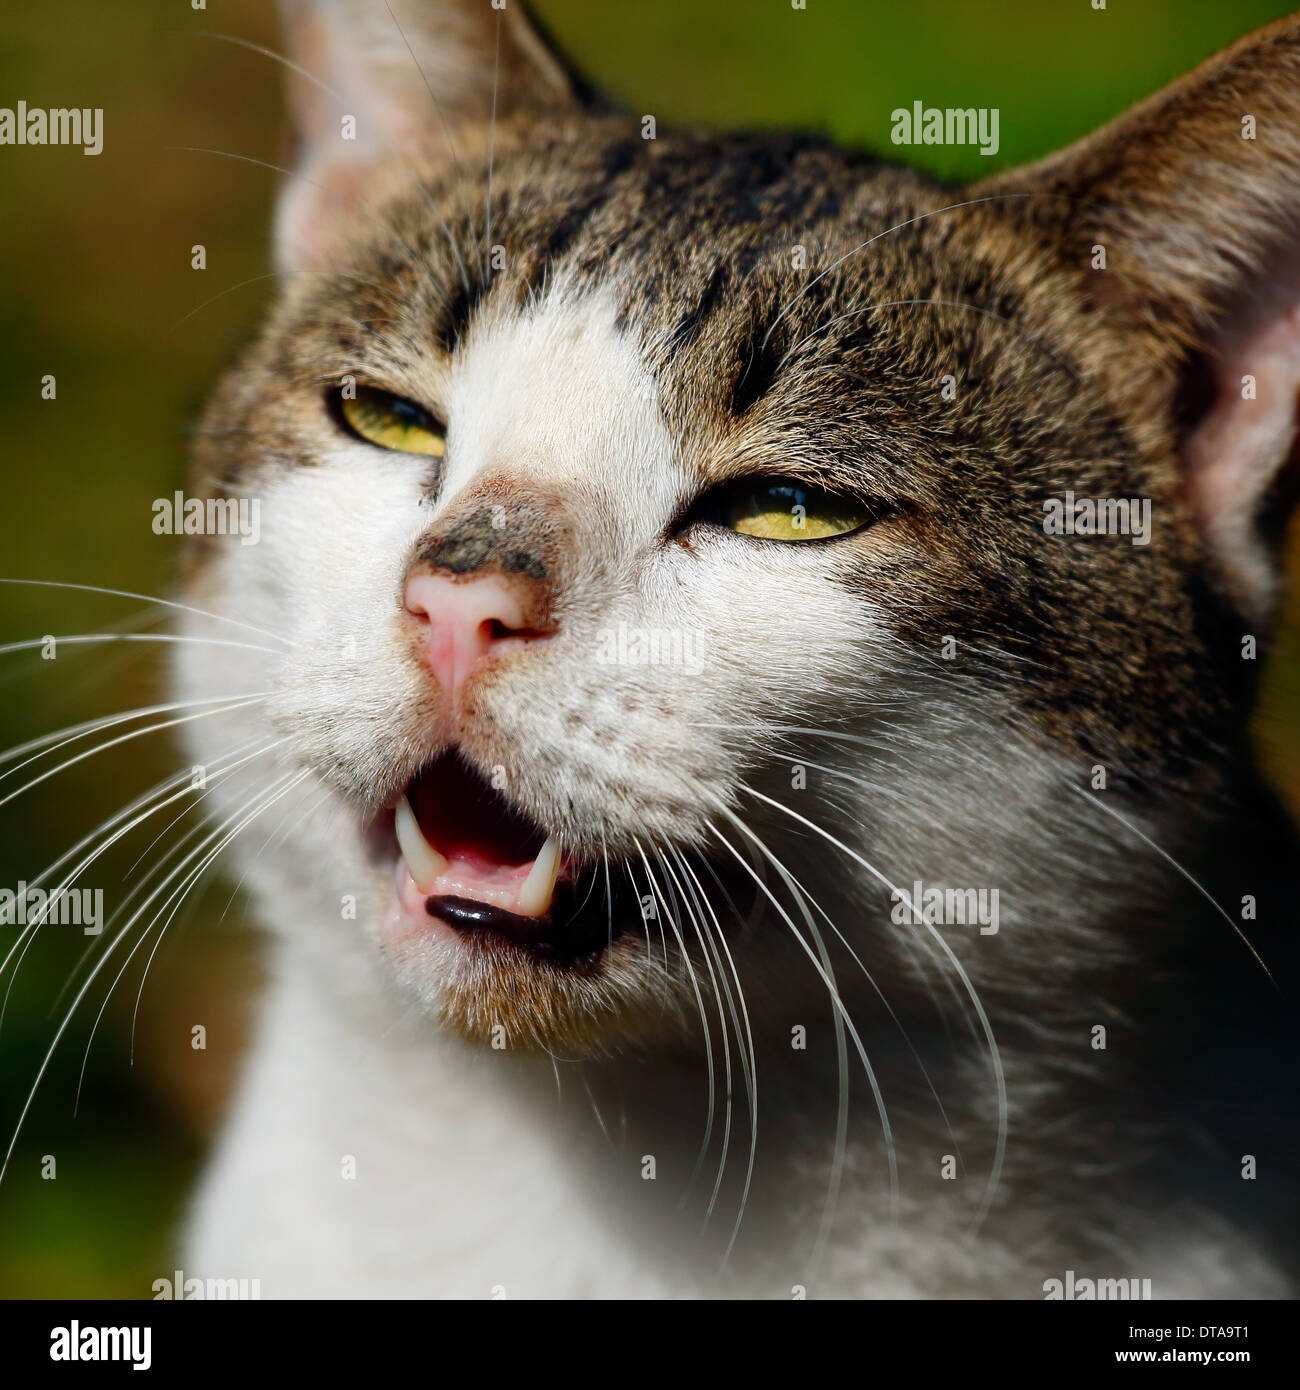 Closeup view of a cute cat face Stock Photo